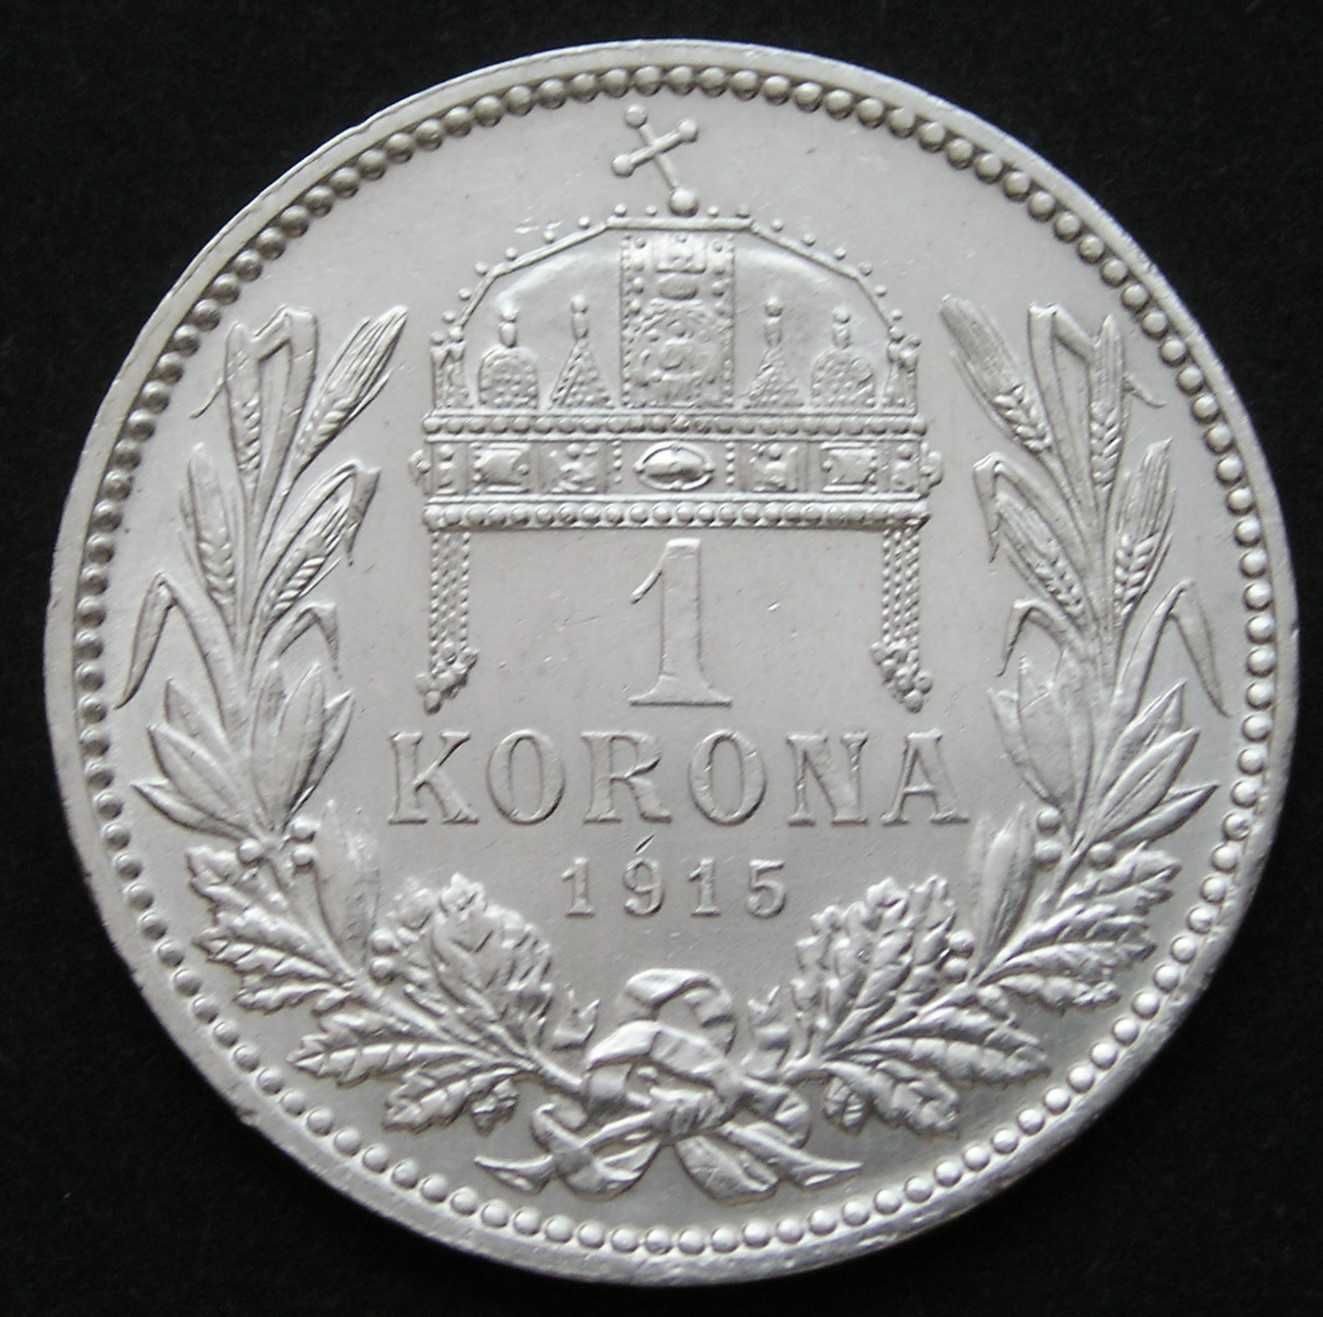 Austro-Węgry 1 korona 1915 - Jozsef Ferencz - srebro